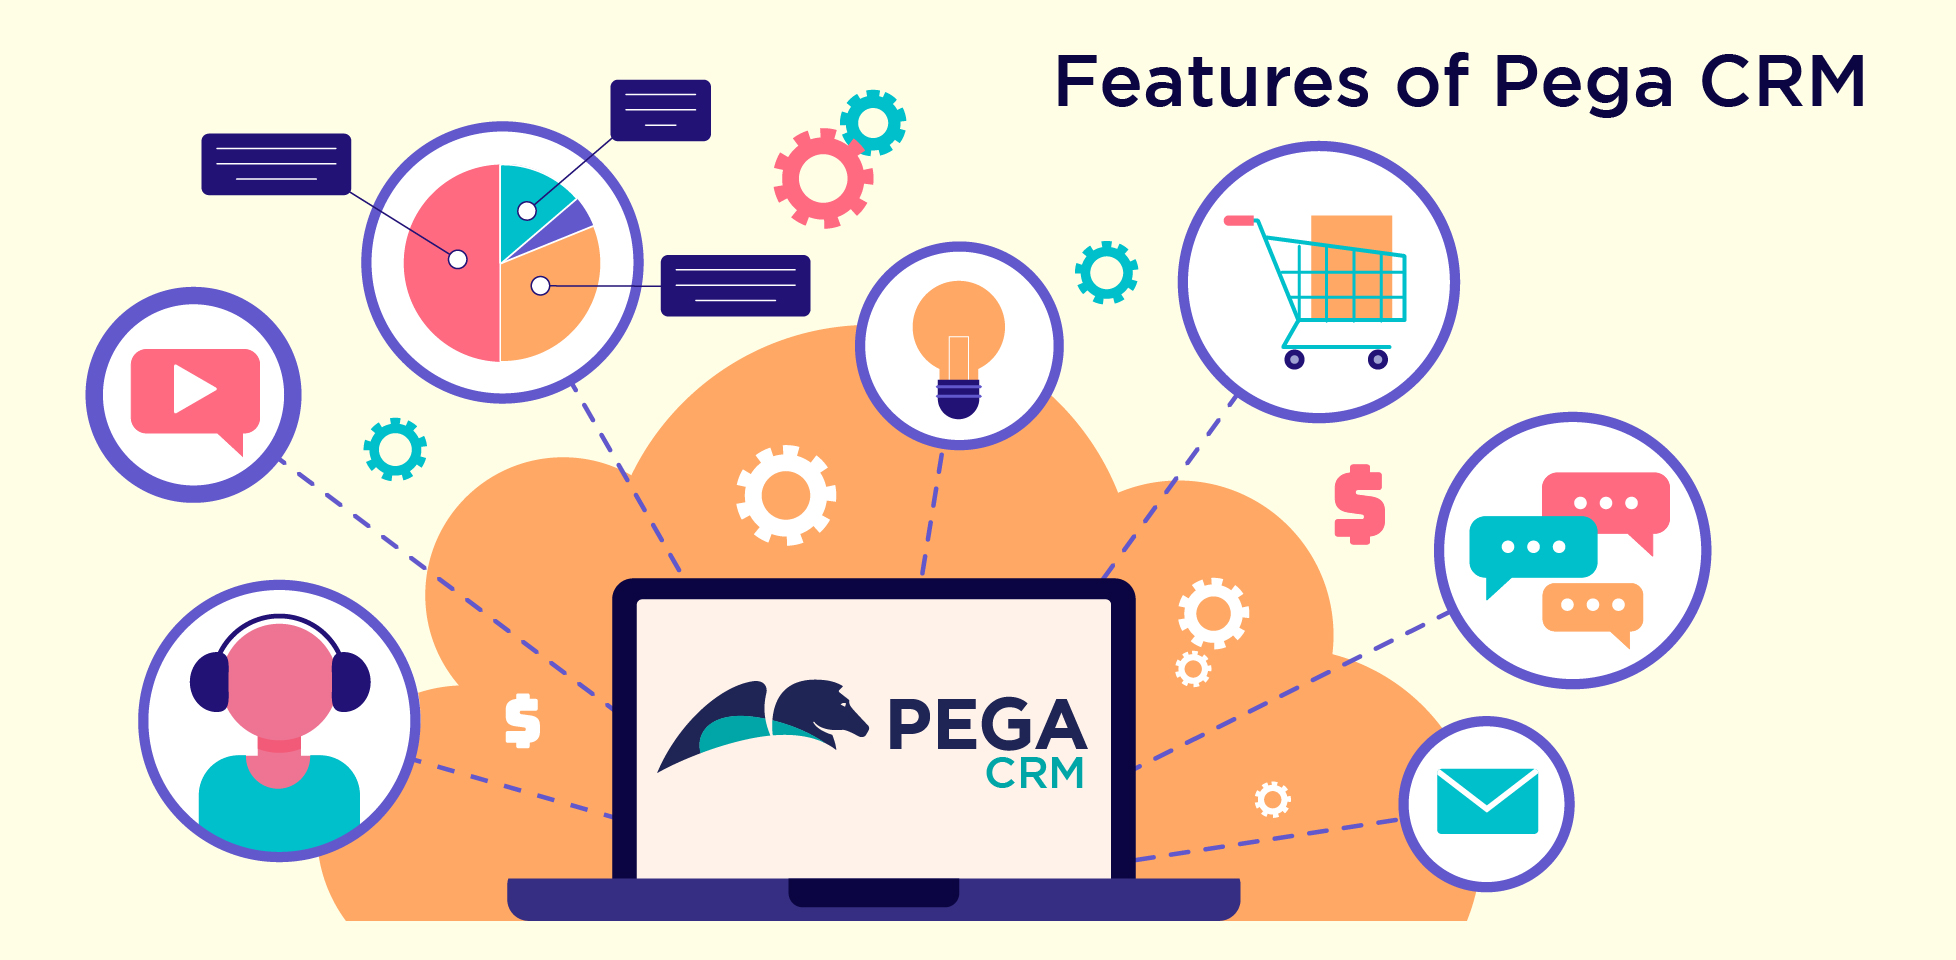 Features of Pega CRM